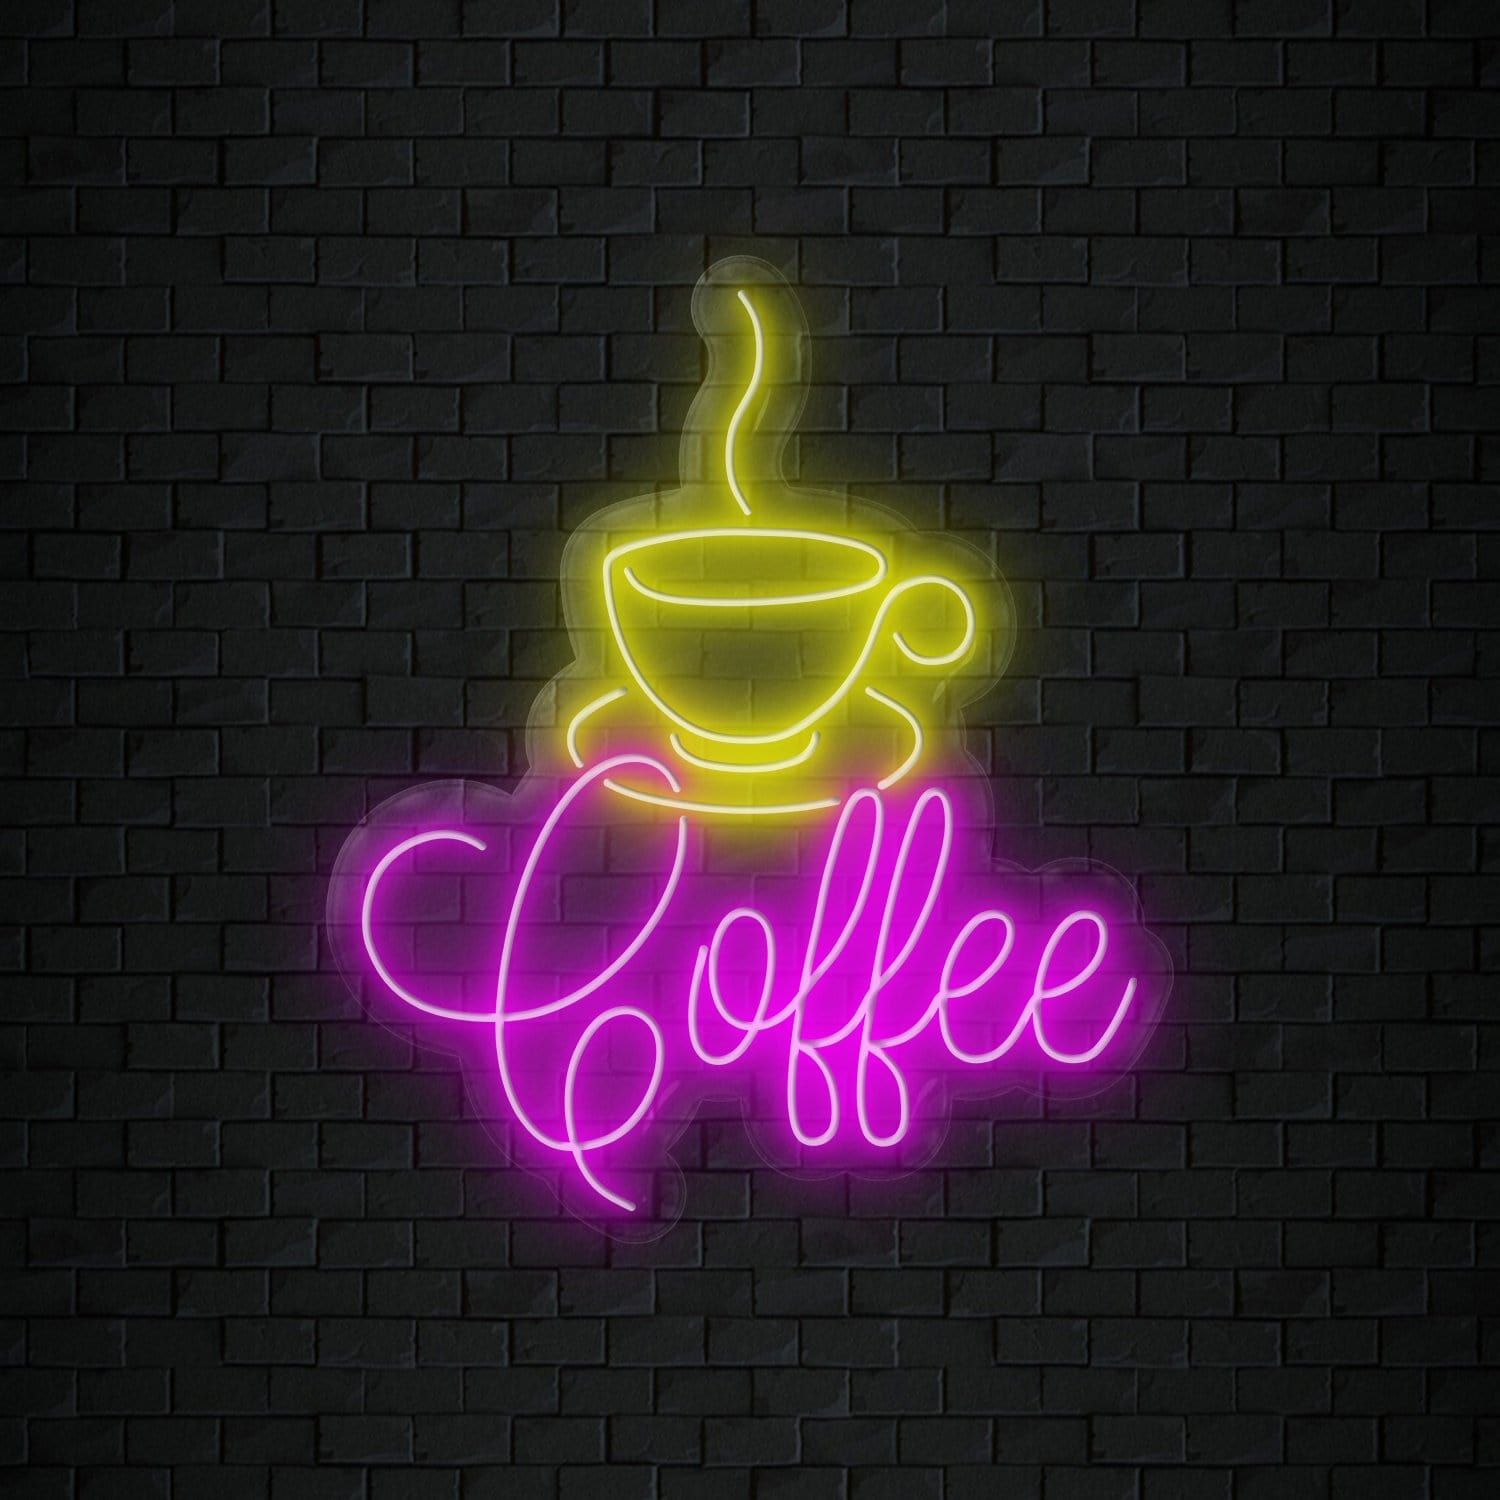 "Coffee" LED Neonschild Sign Schriftzug - NEONEVERGLOW